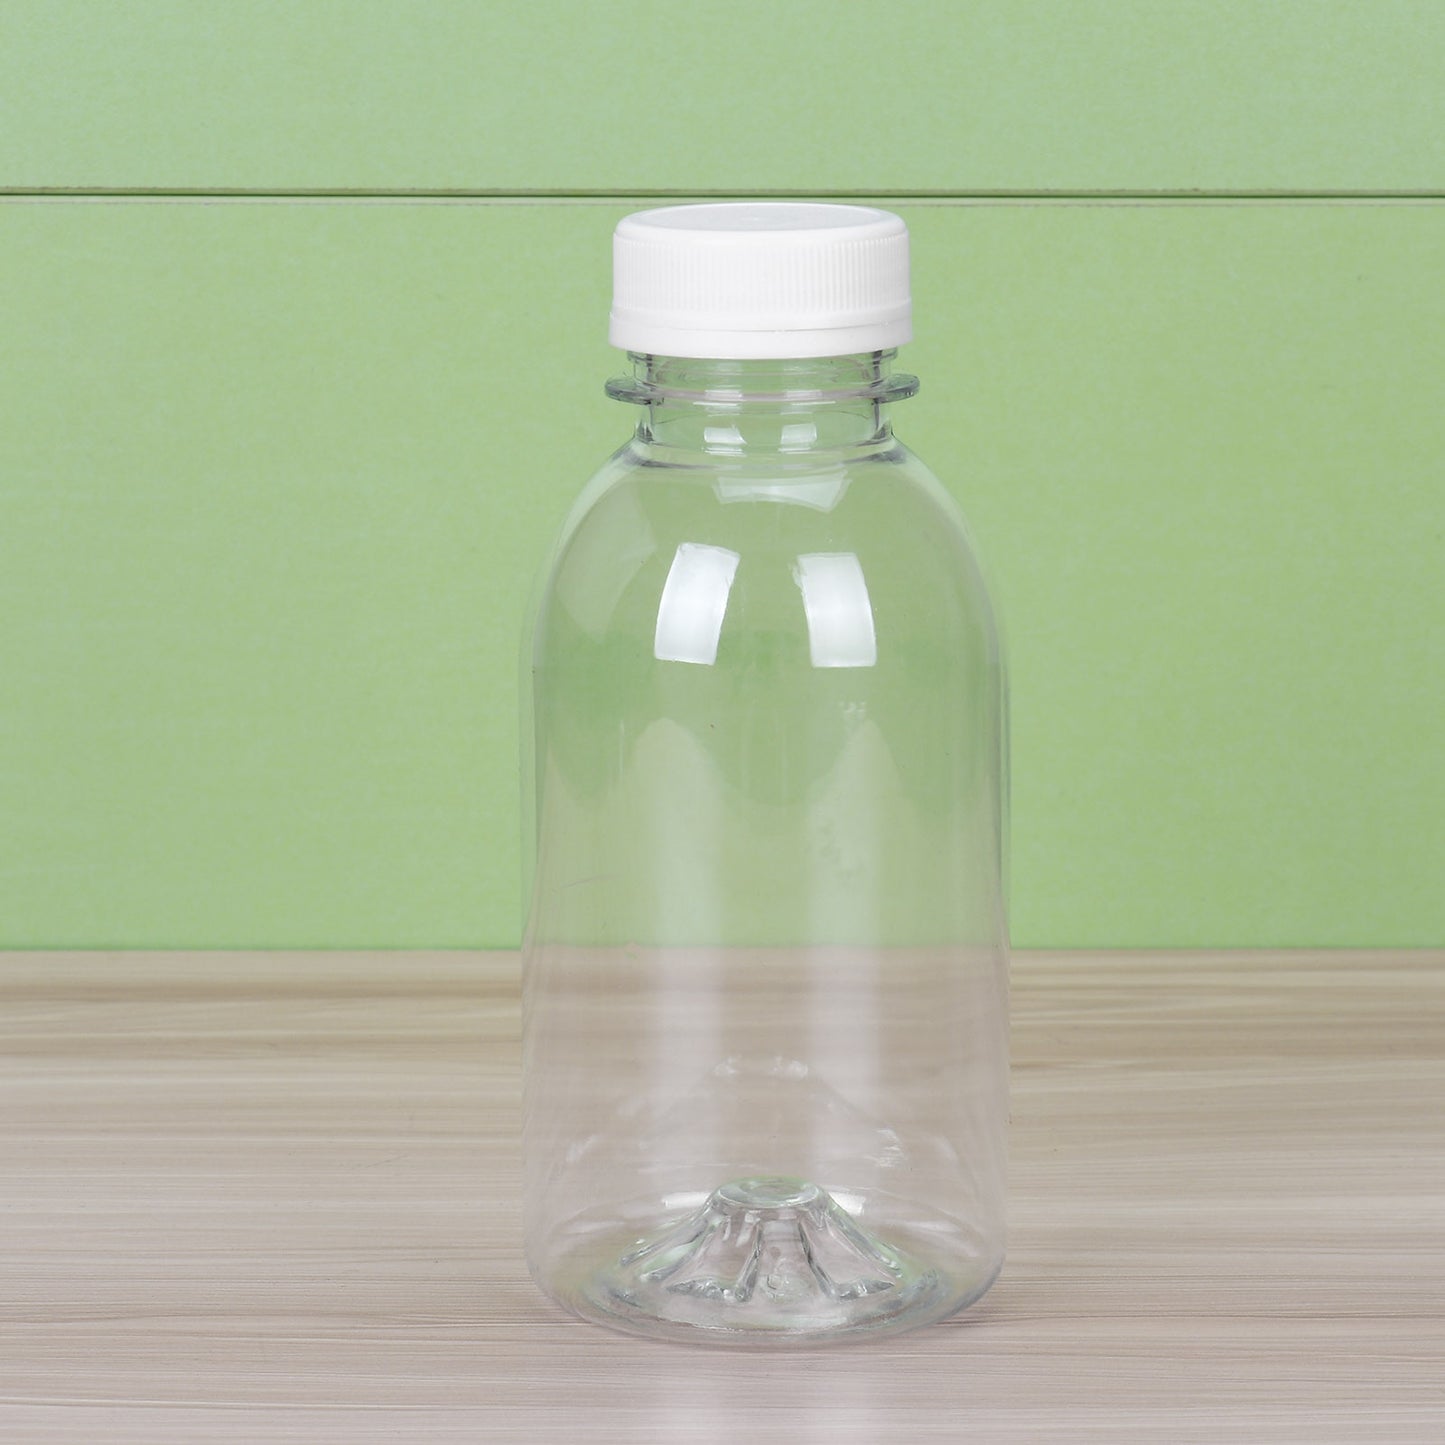 Reusable Clear Plastic Bottles